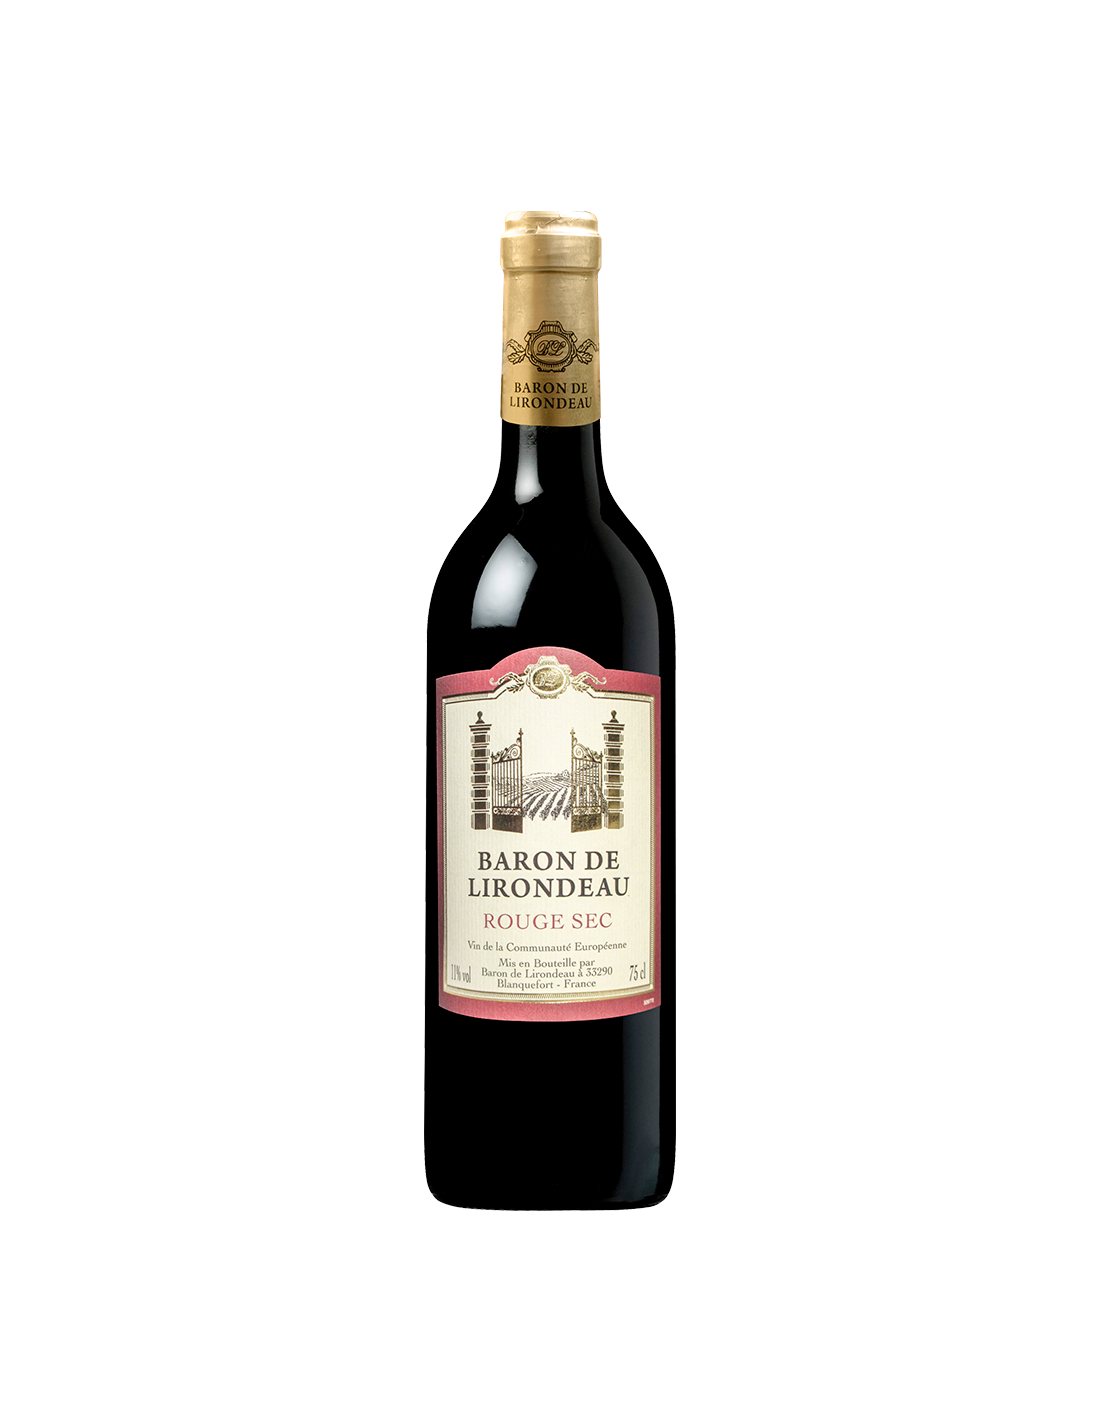 Vin rosu sec Baron de Lirondeau, 0.75L, 11% alc., Franta alcooldiscount.ro